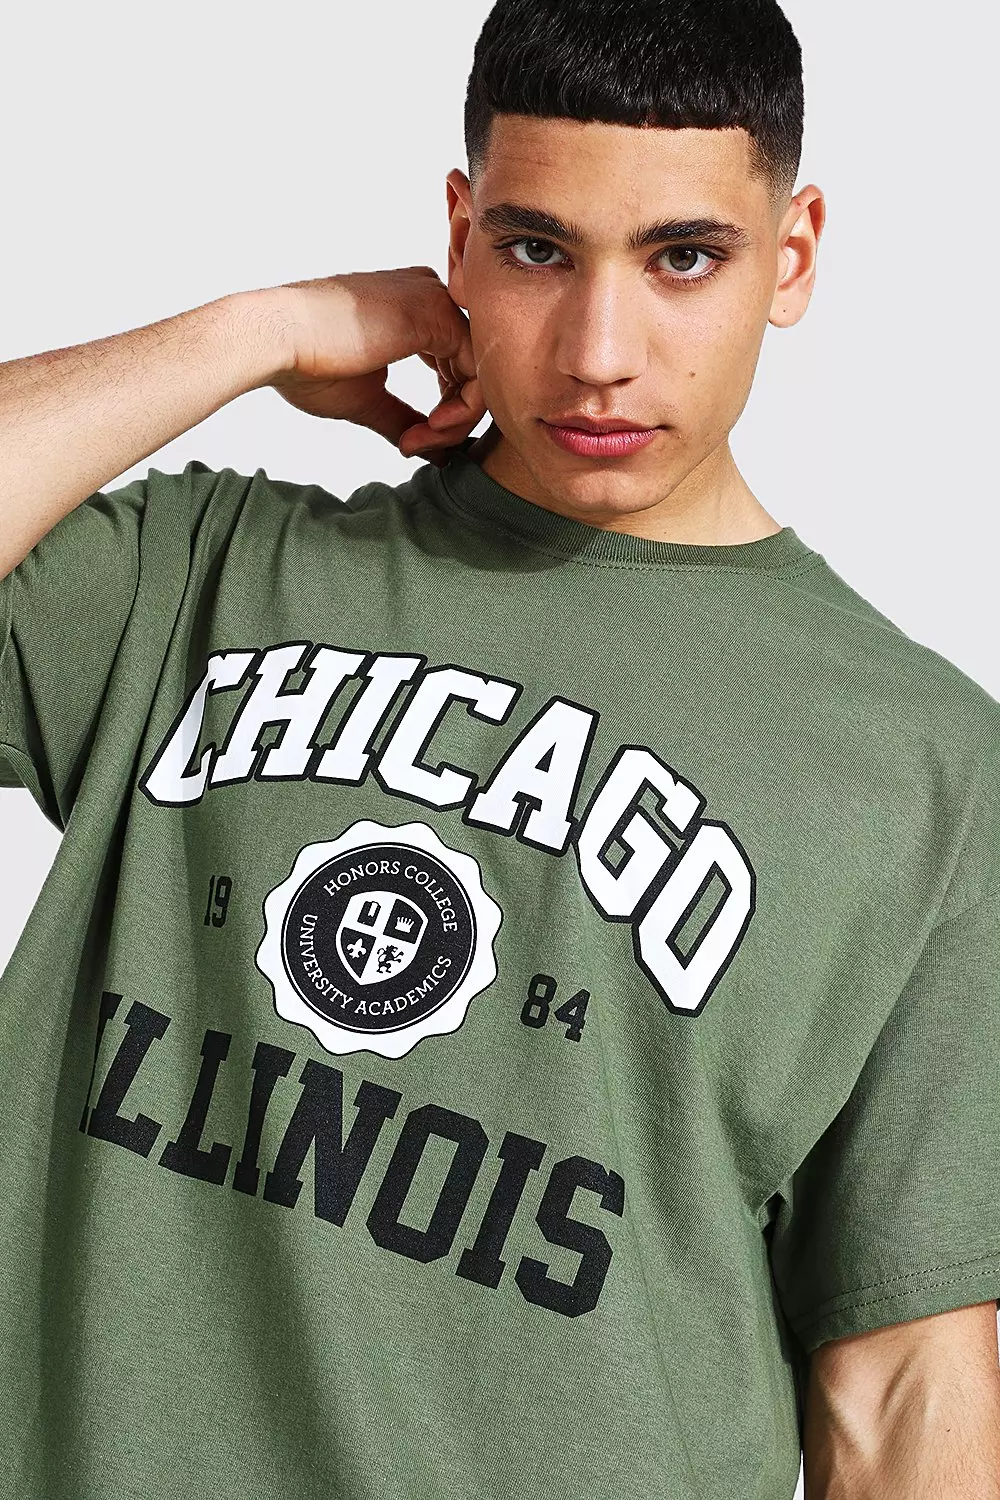 Chicago - Illinois T-Shirt